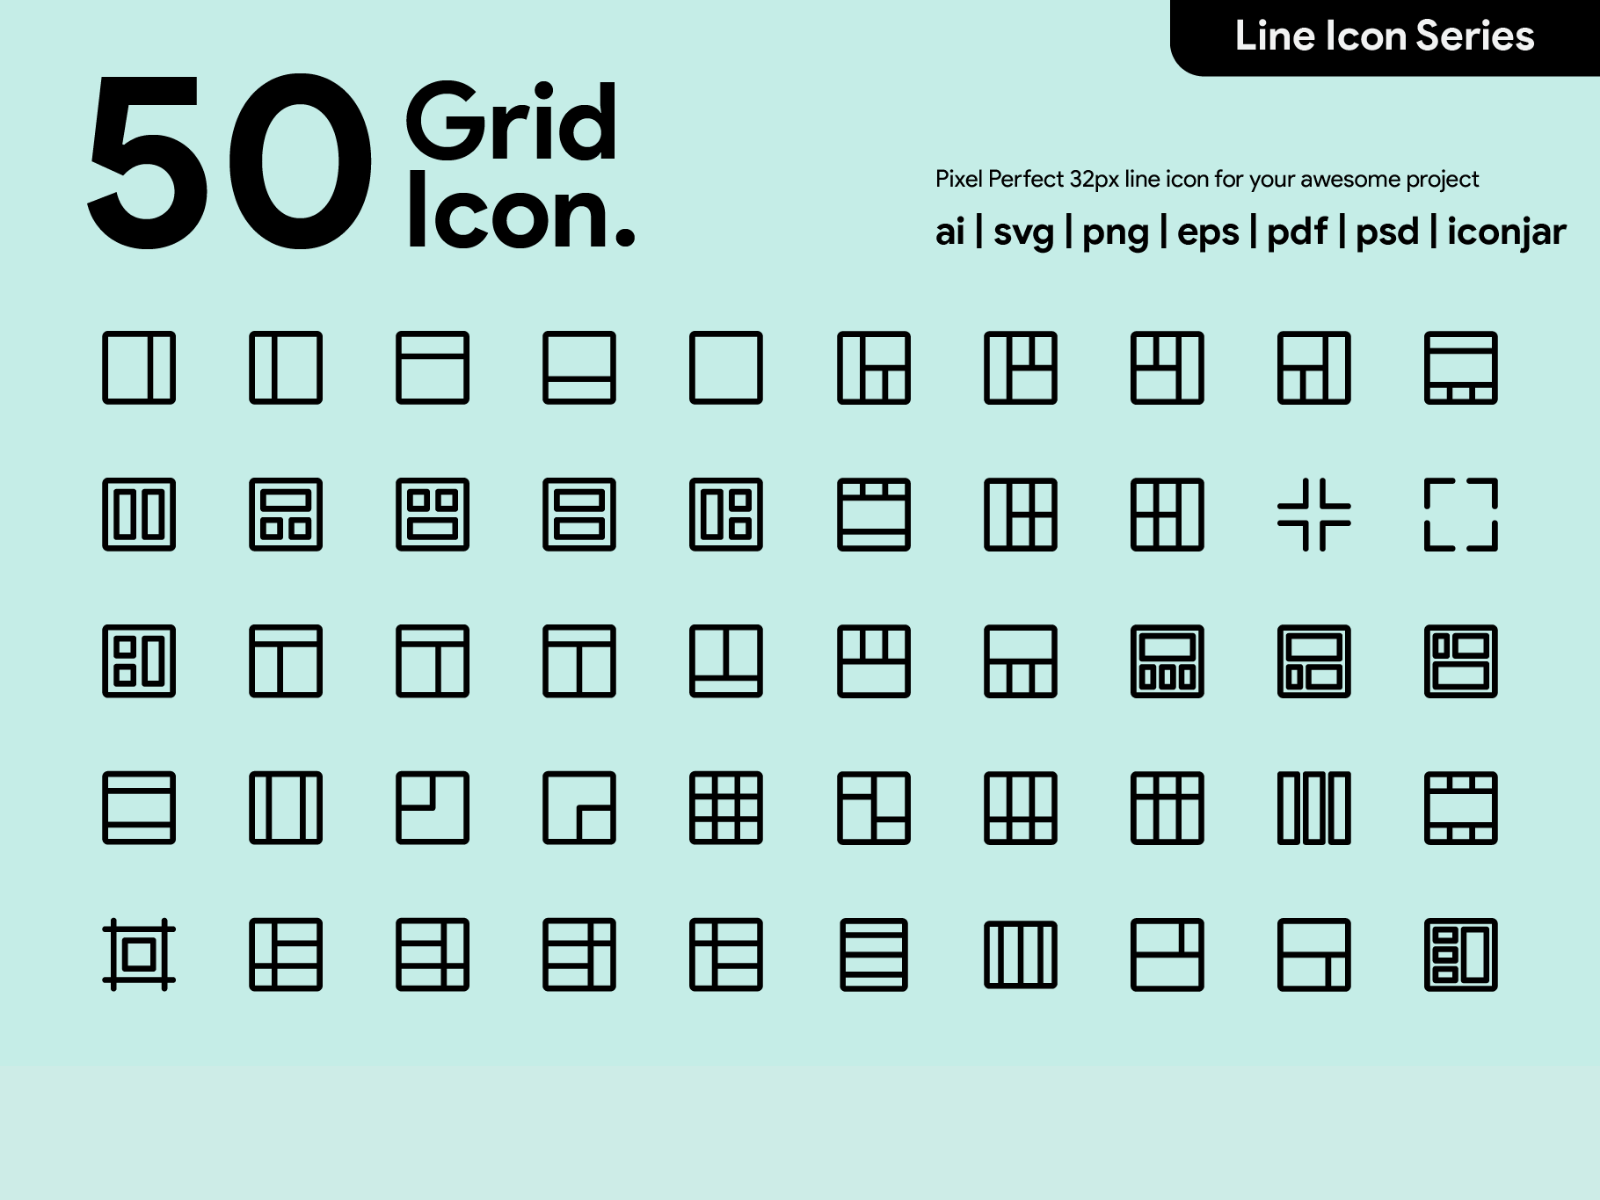 App icons design idea #296: Kawaicon - 50 Grid Line Icon